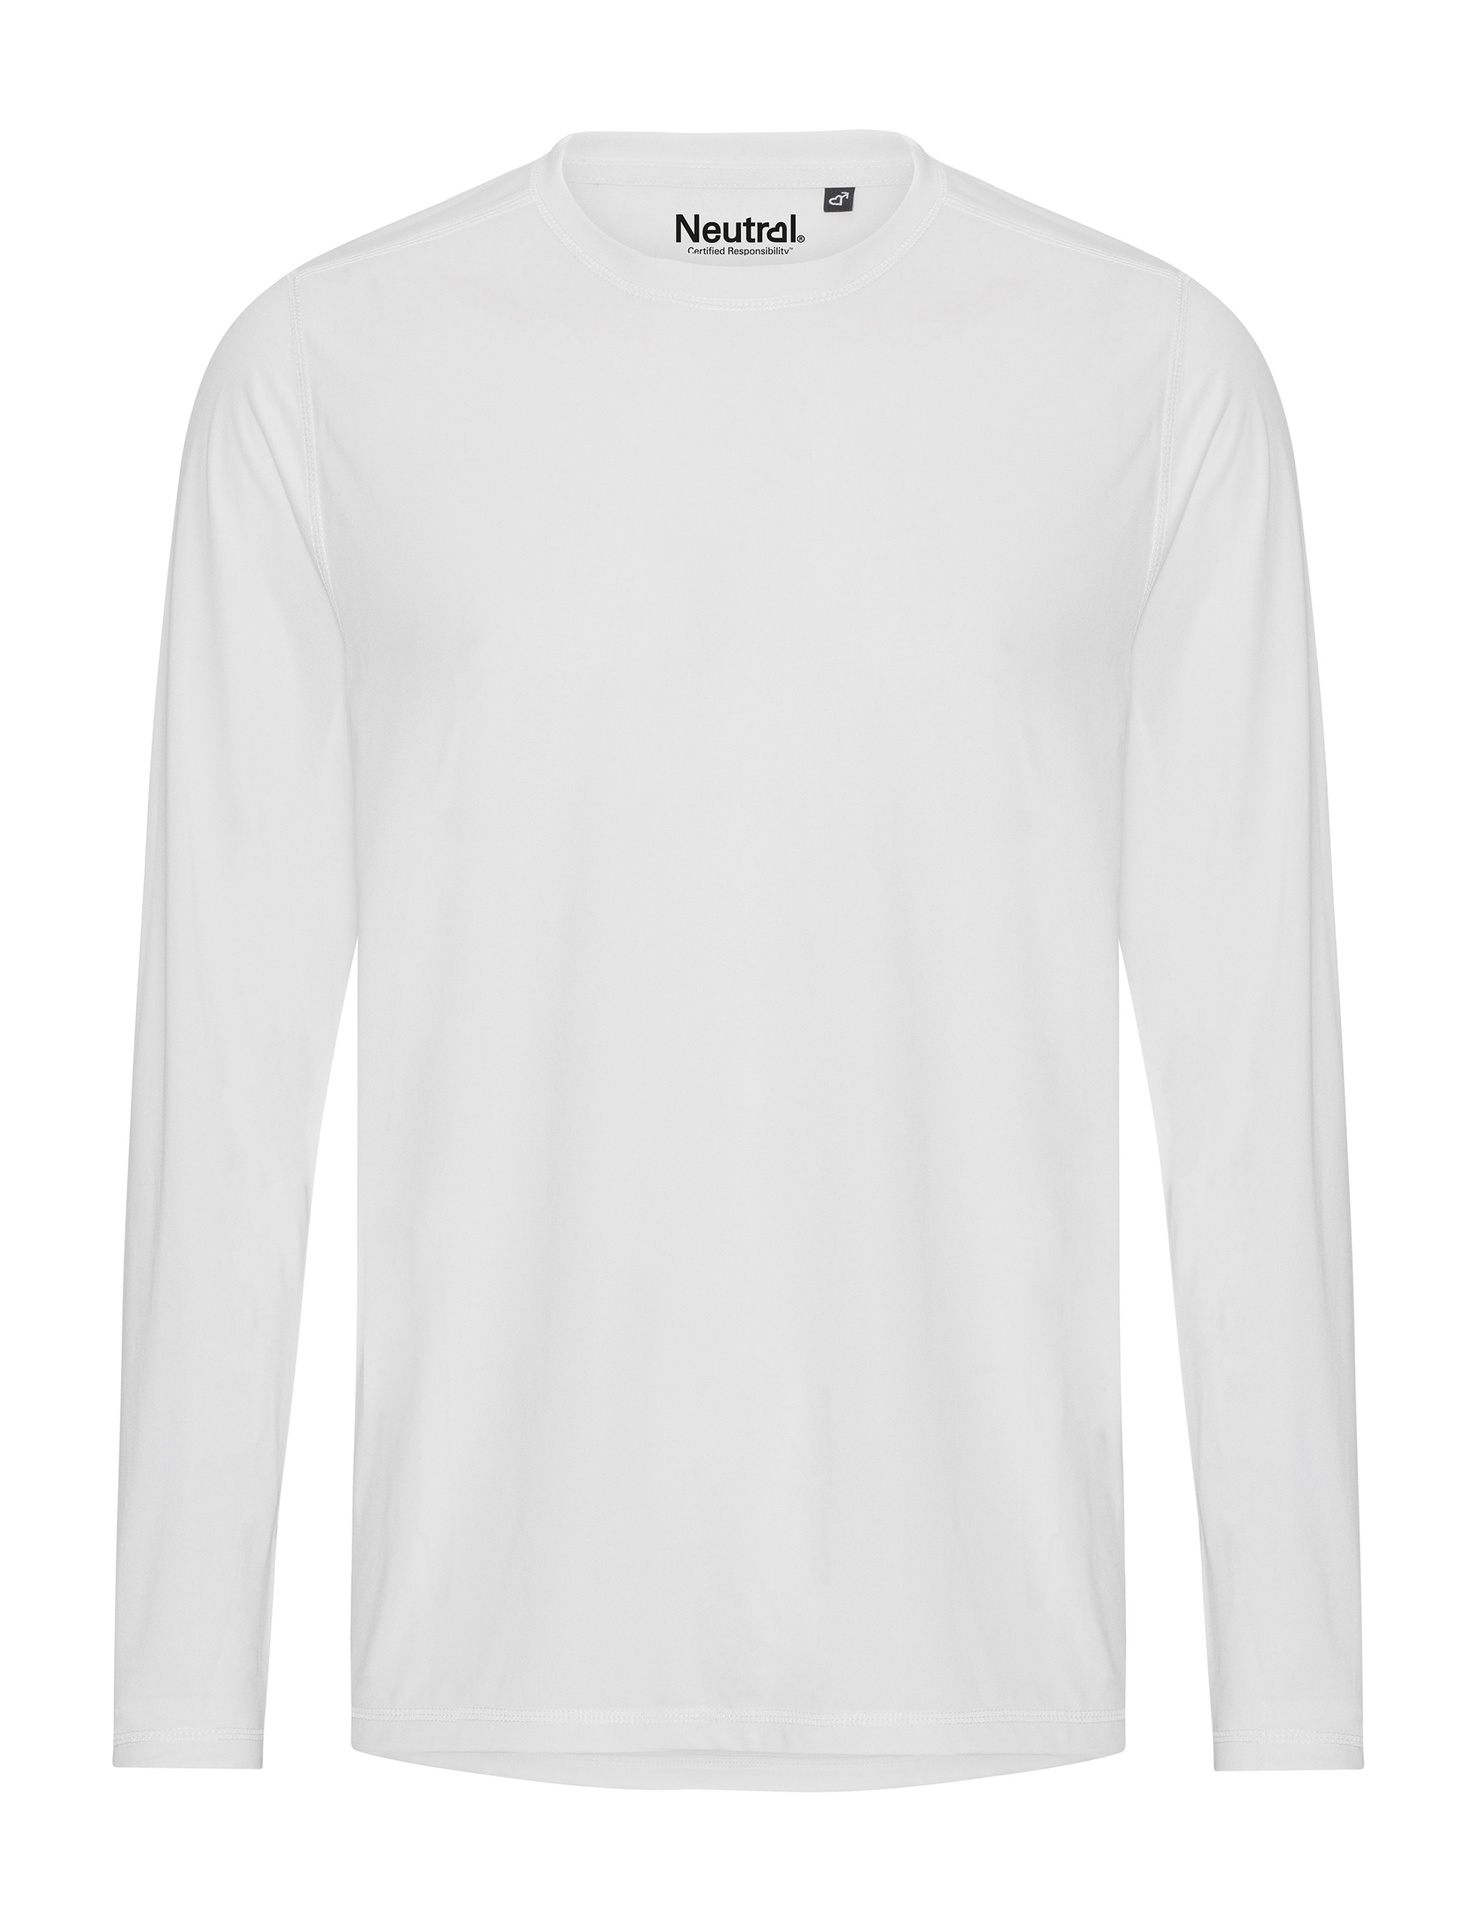 [PR/03825] Recycled Performance LS T-Shirt (White 01, 3XL)